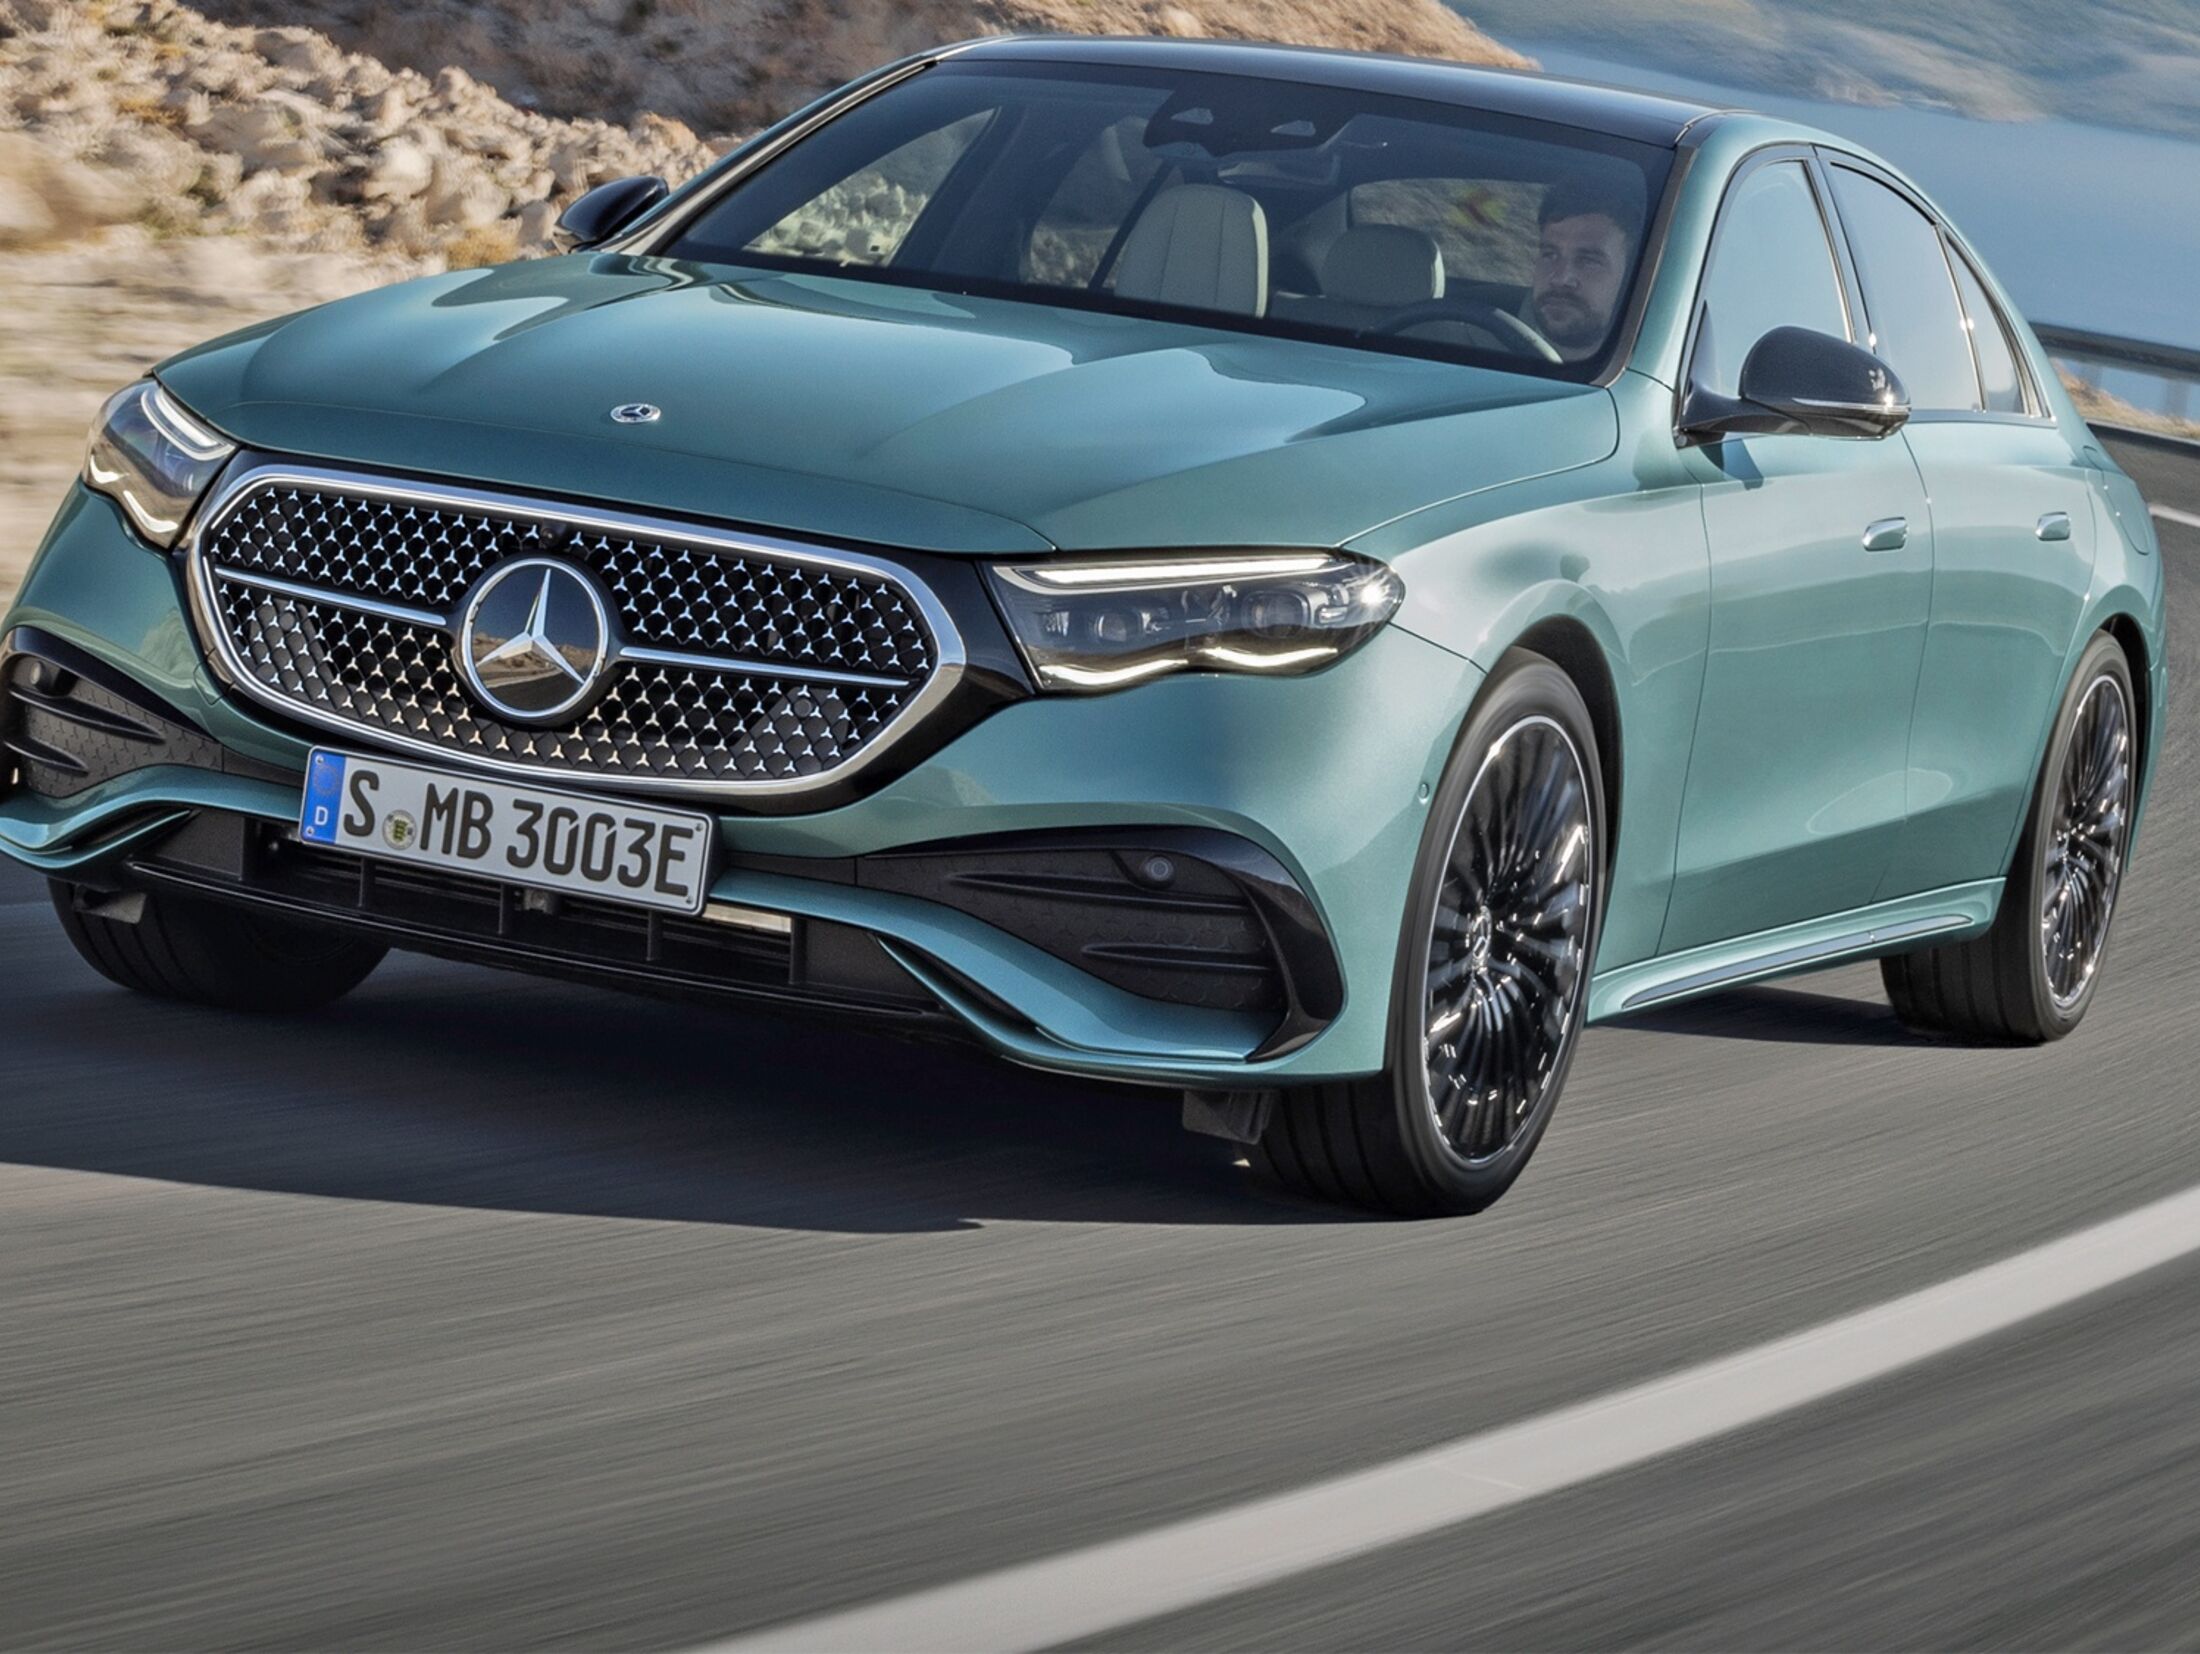 Mercedes V-Klasse (2021): fast 11.000 Euro unter Listenpreis